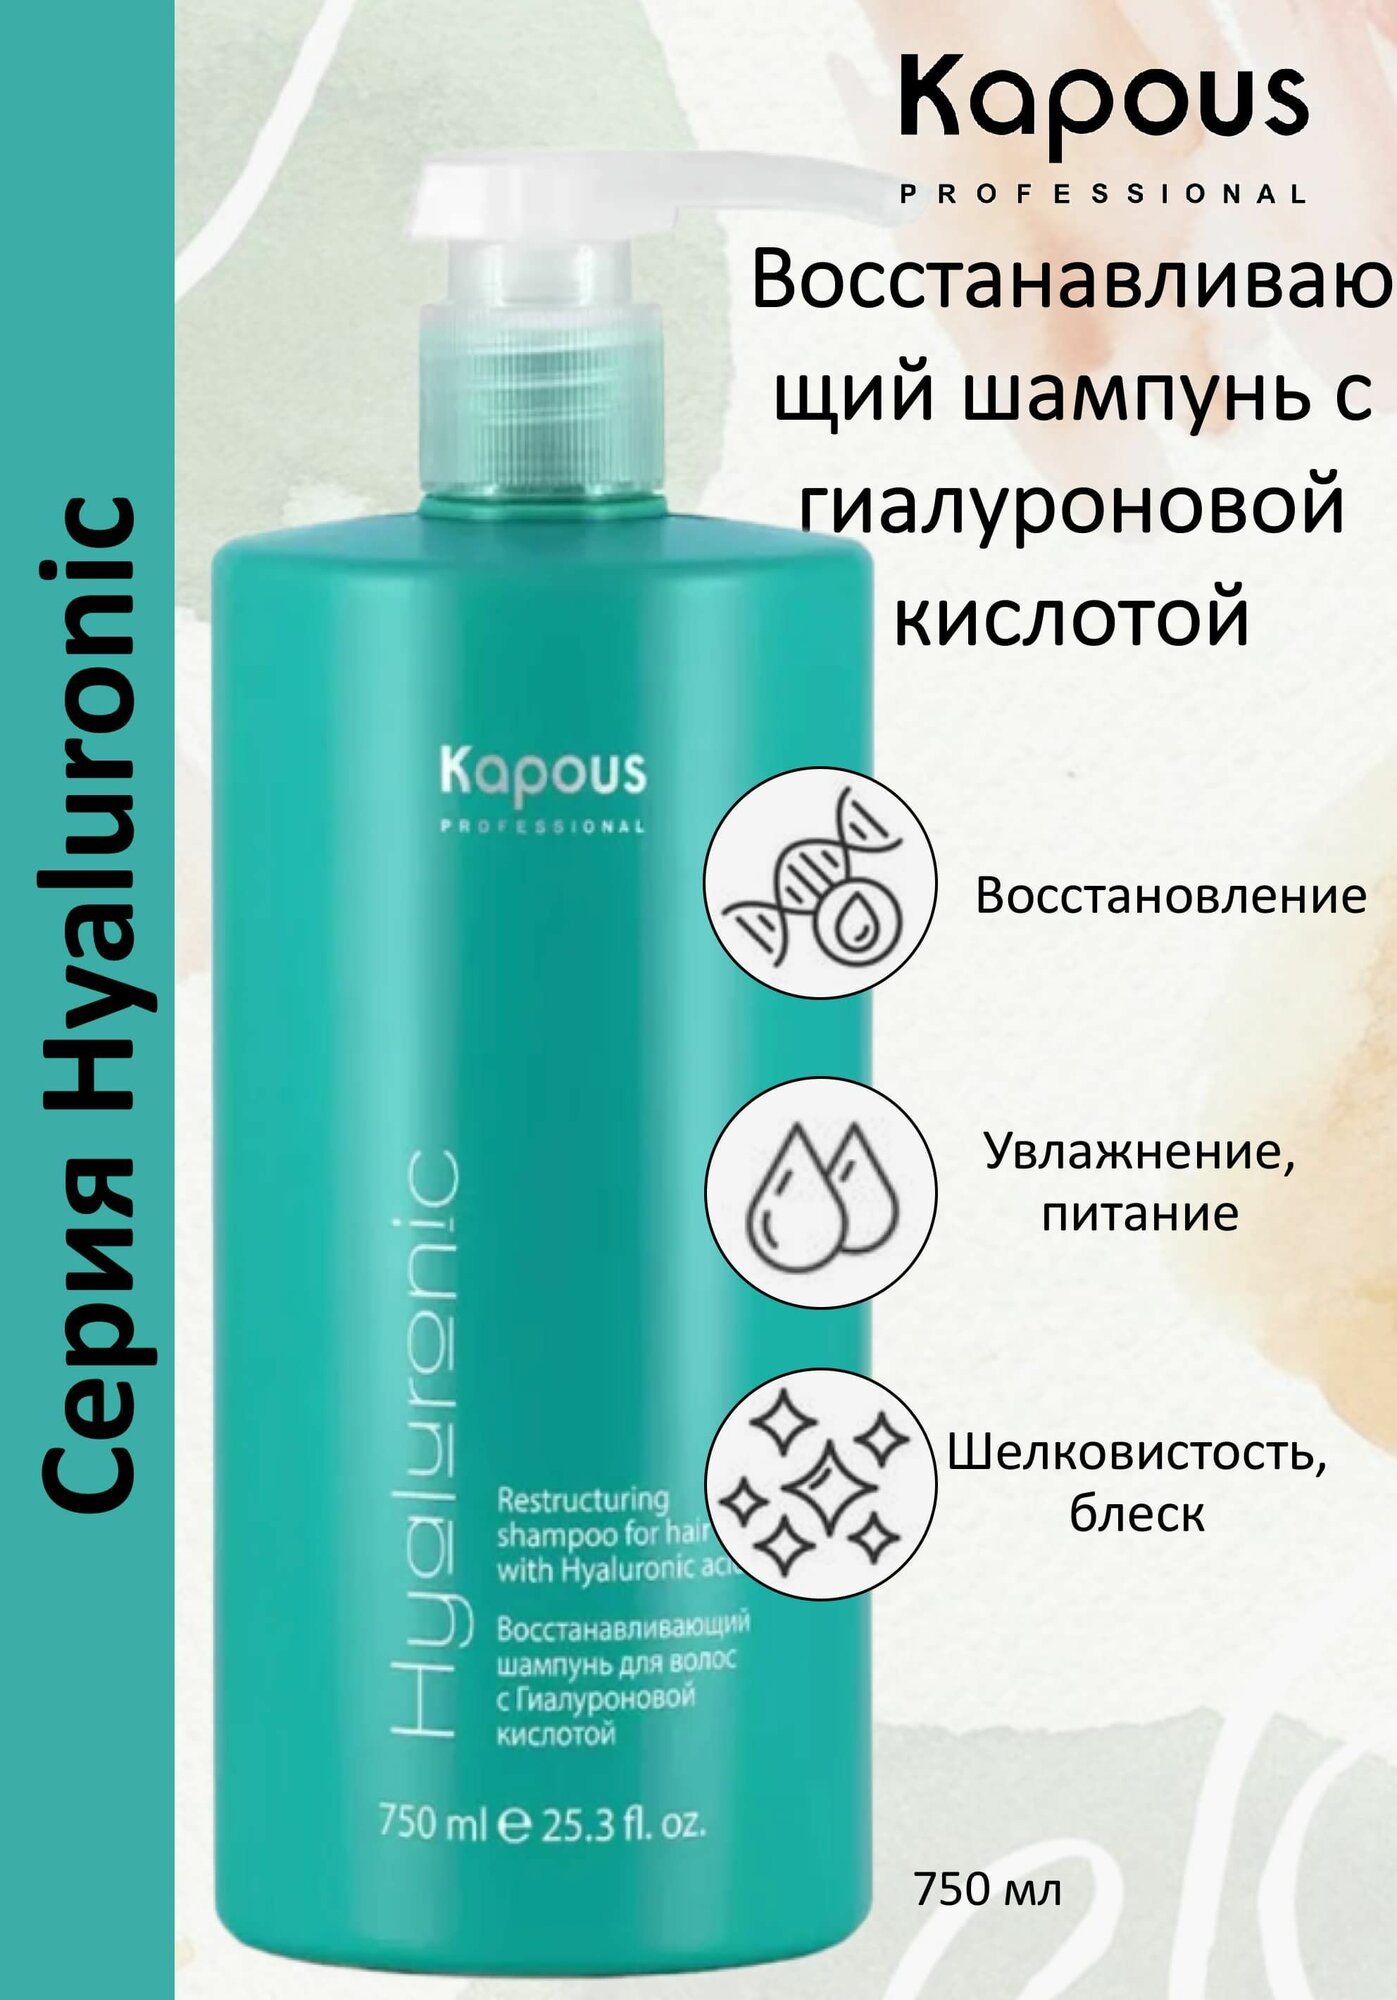 Kapous Professional Восстанавливающий шампунь с гиалуроновой кислотой, 250 мл (Kapous Professional) - фото №3